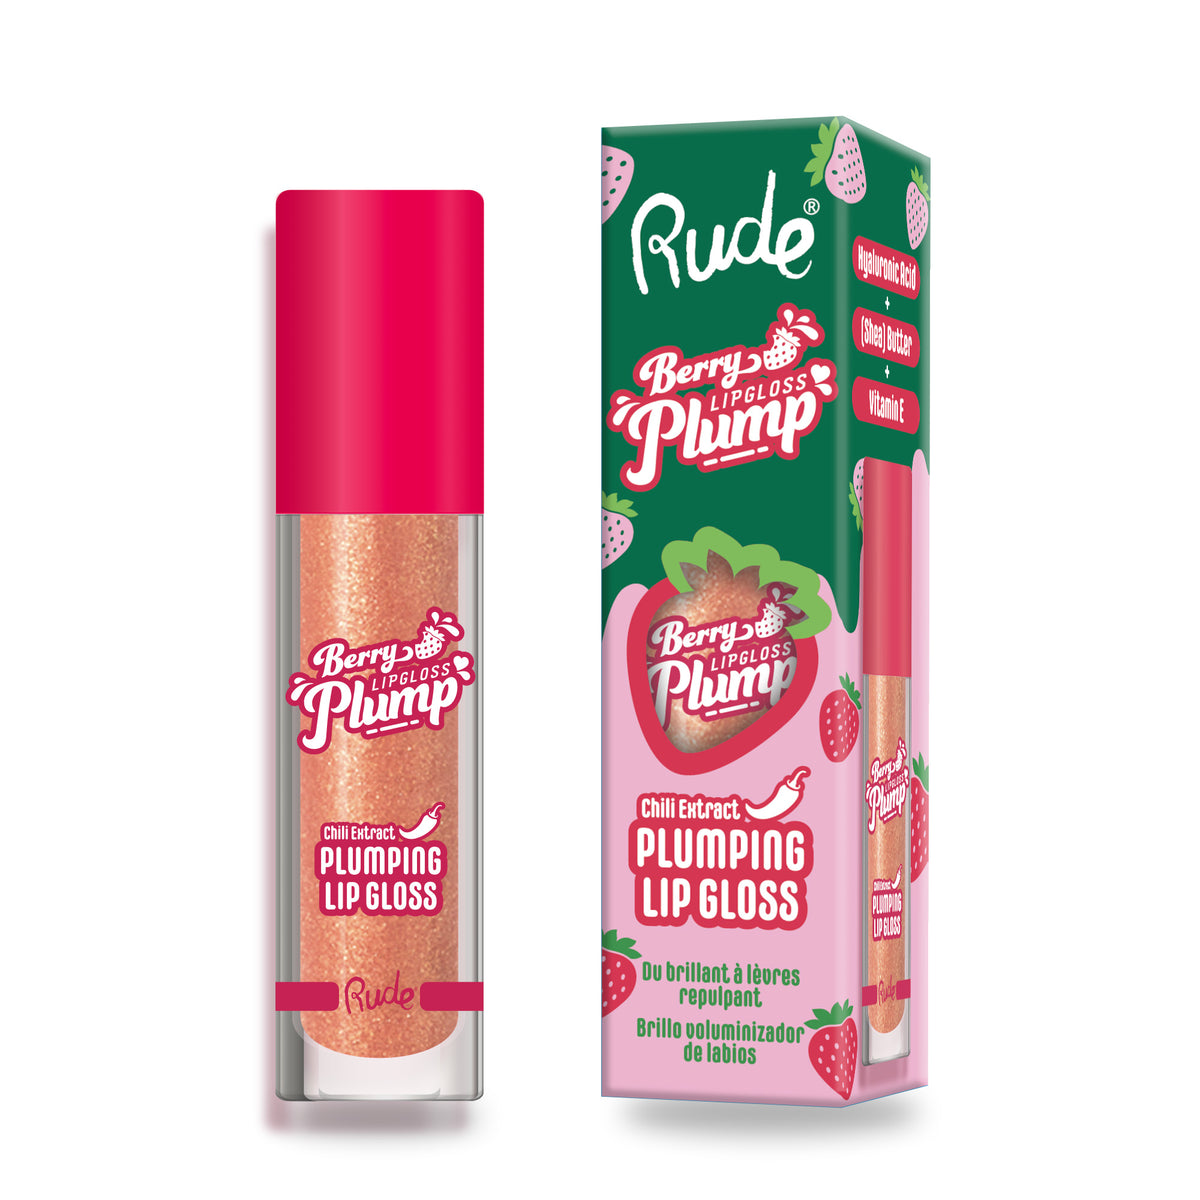 Berry Plump Plumping Lip Gloss Display Set, 64 pcs